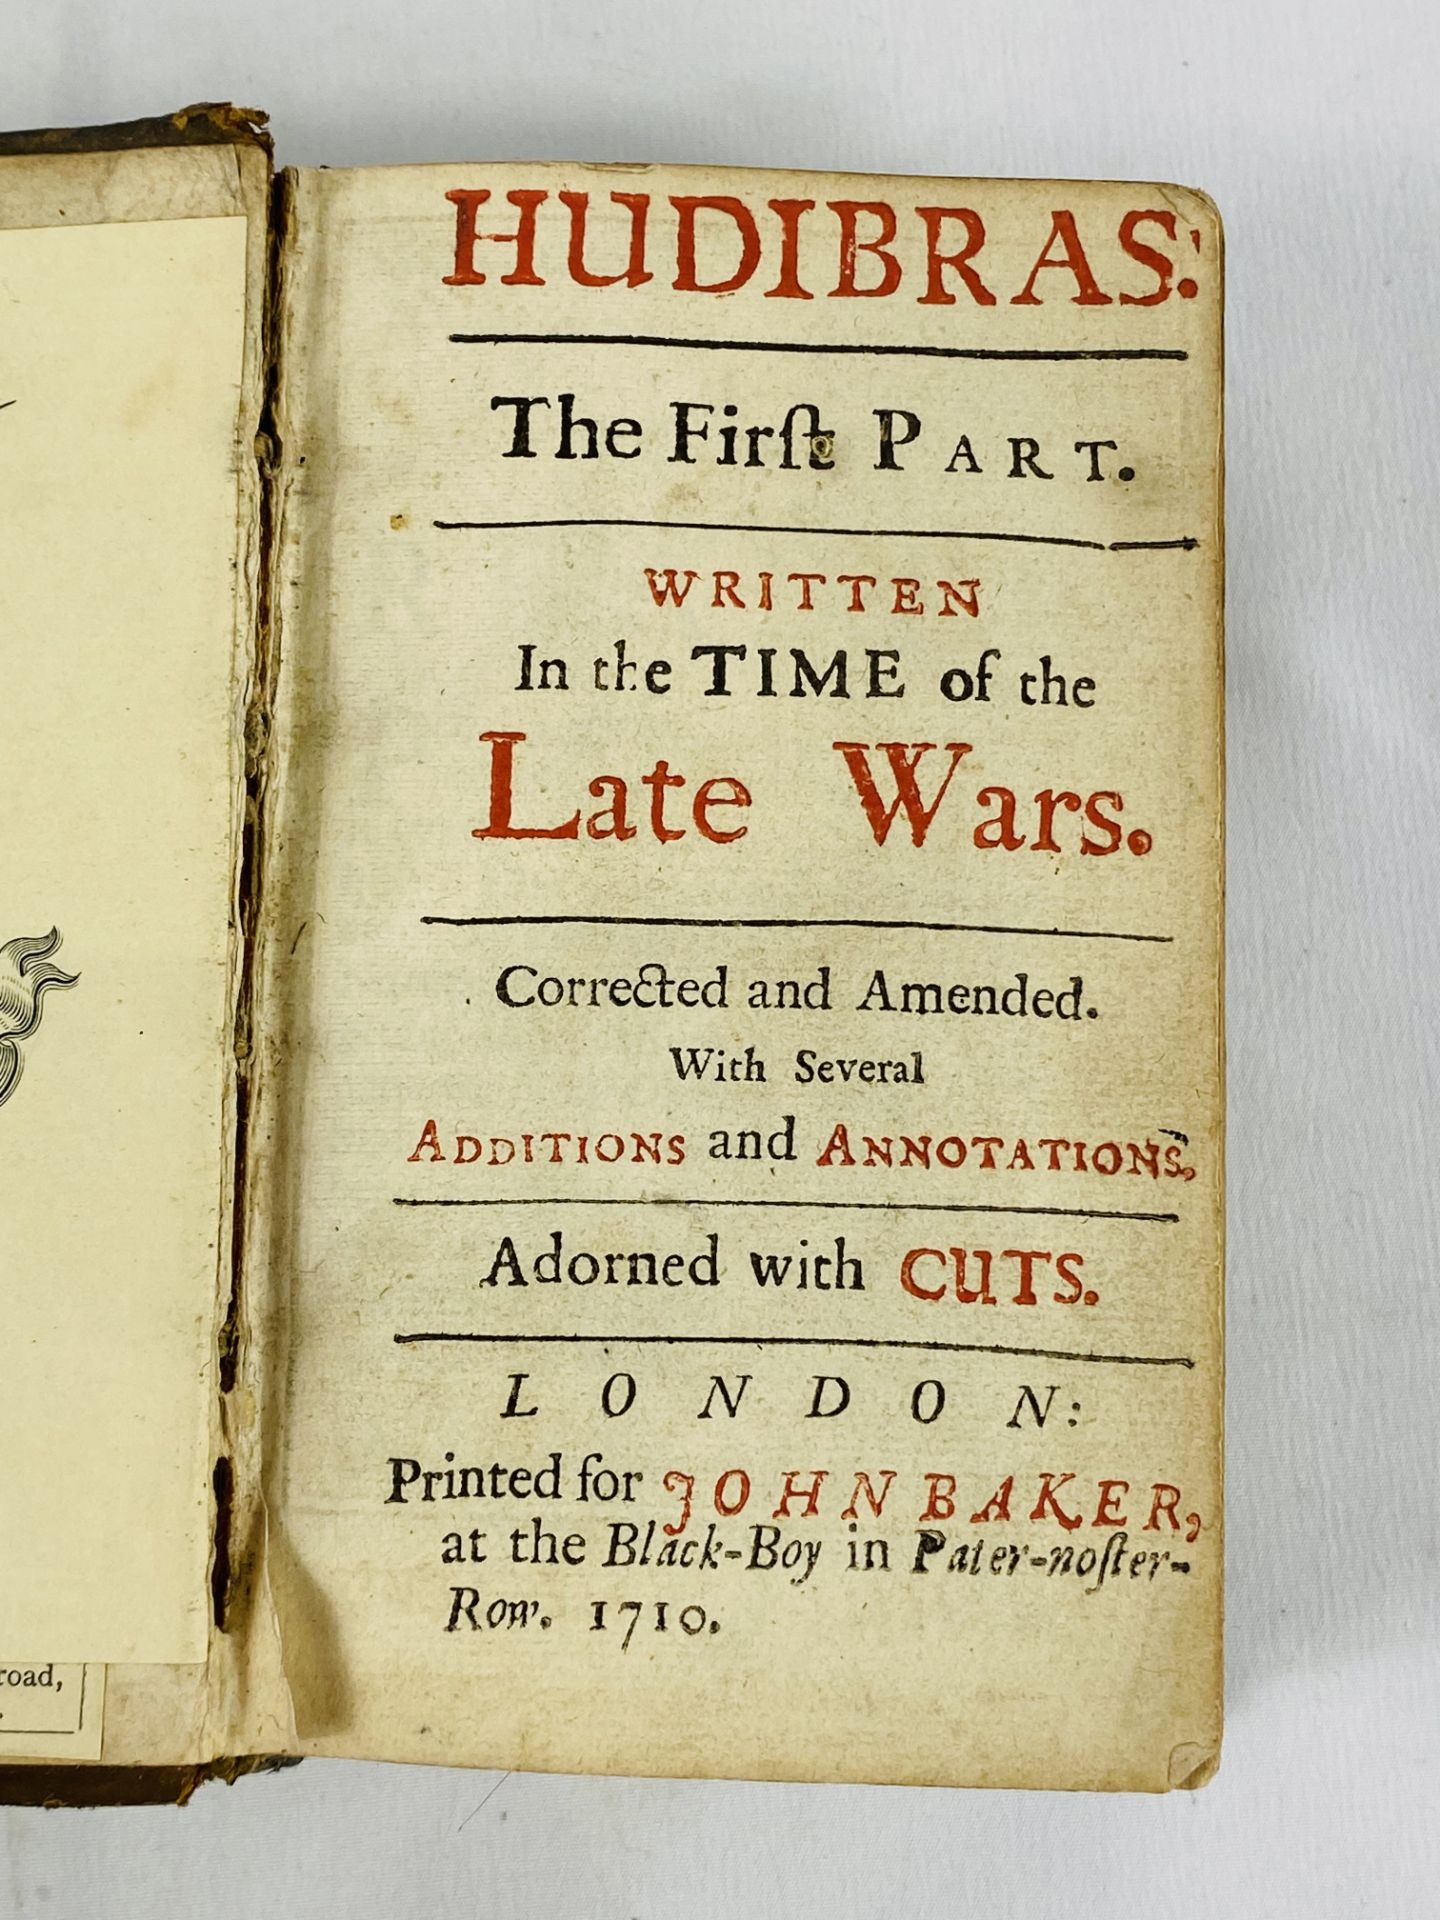 Hudibras, printed 1710 - Image 3 of 3